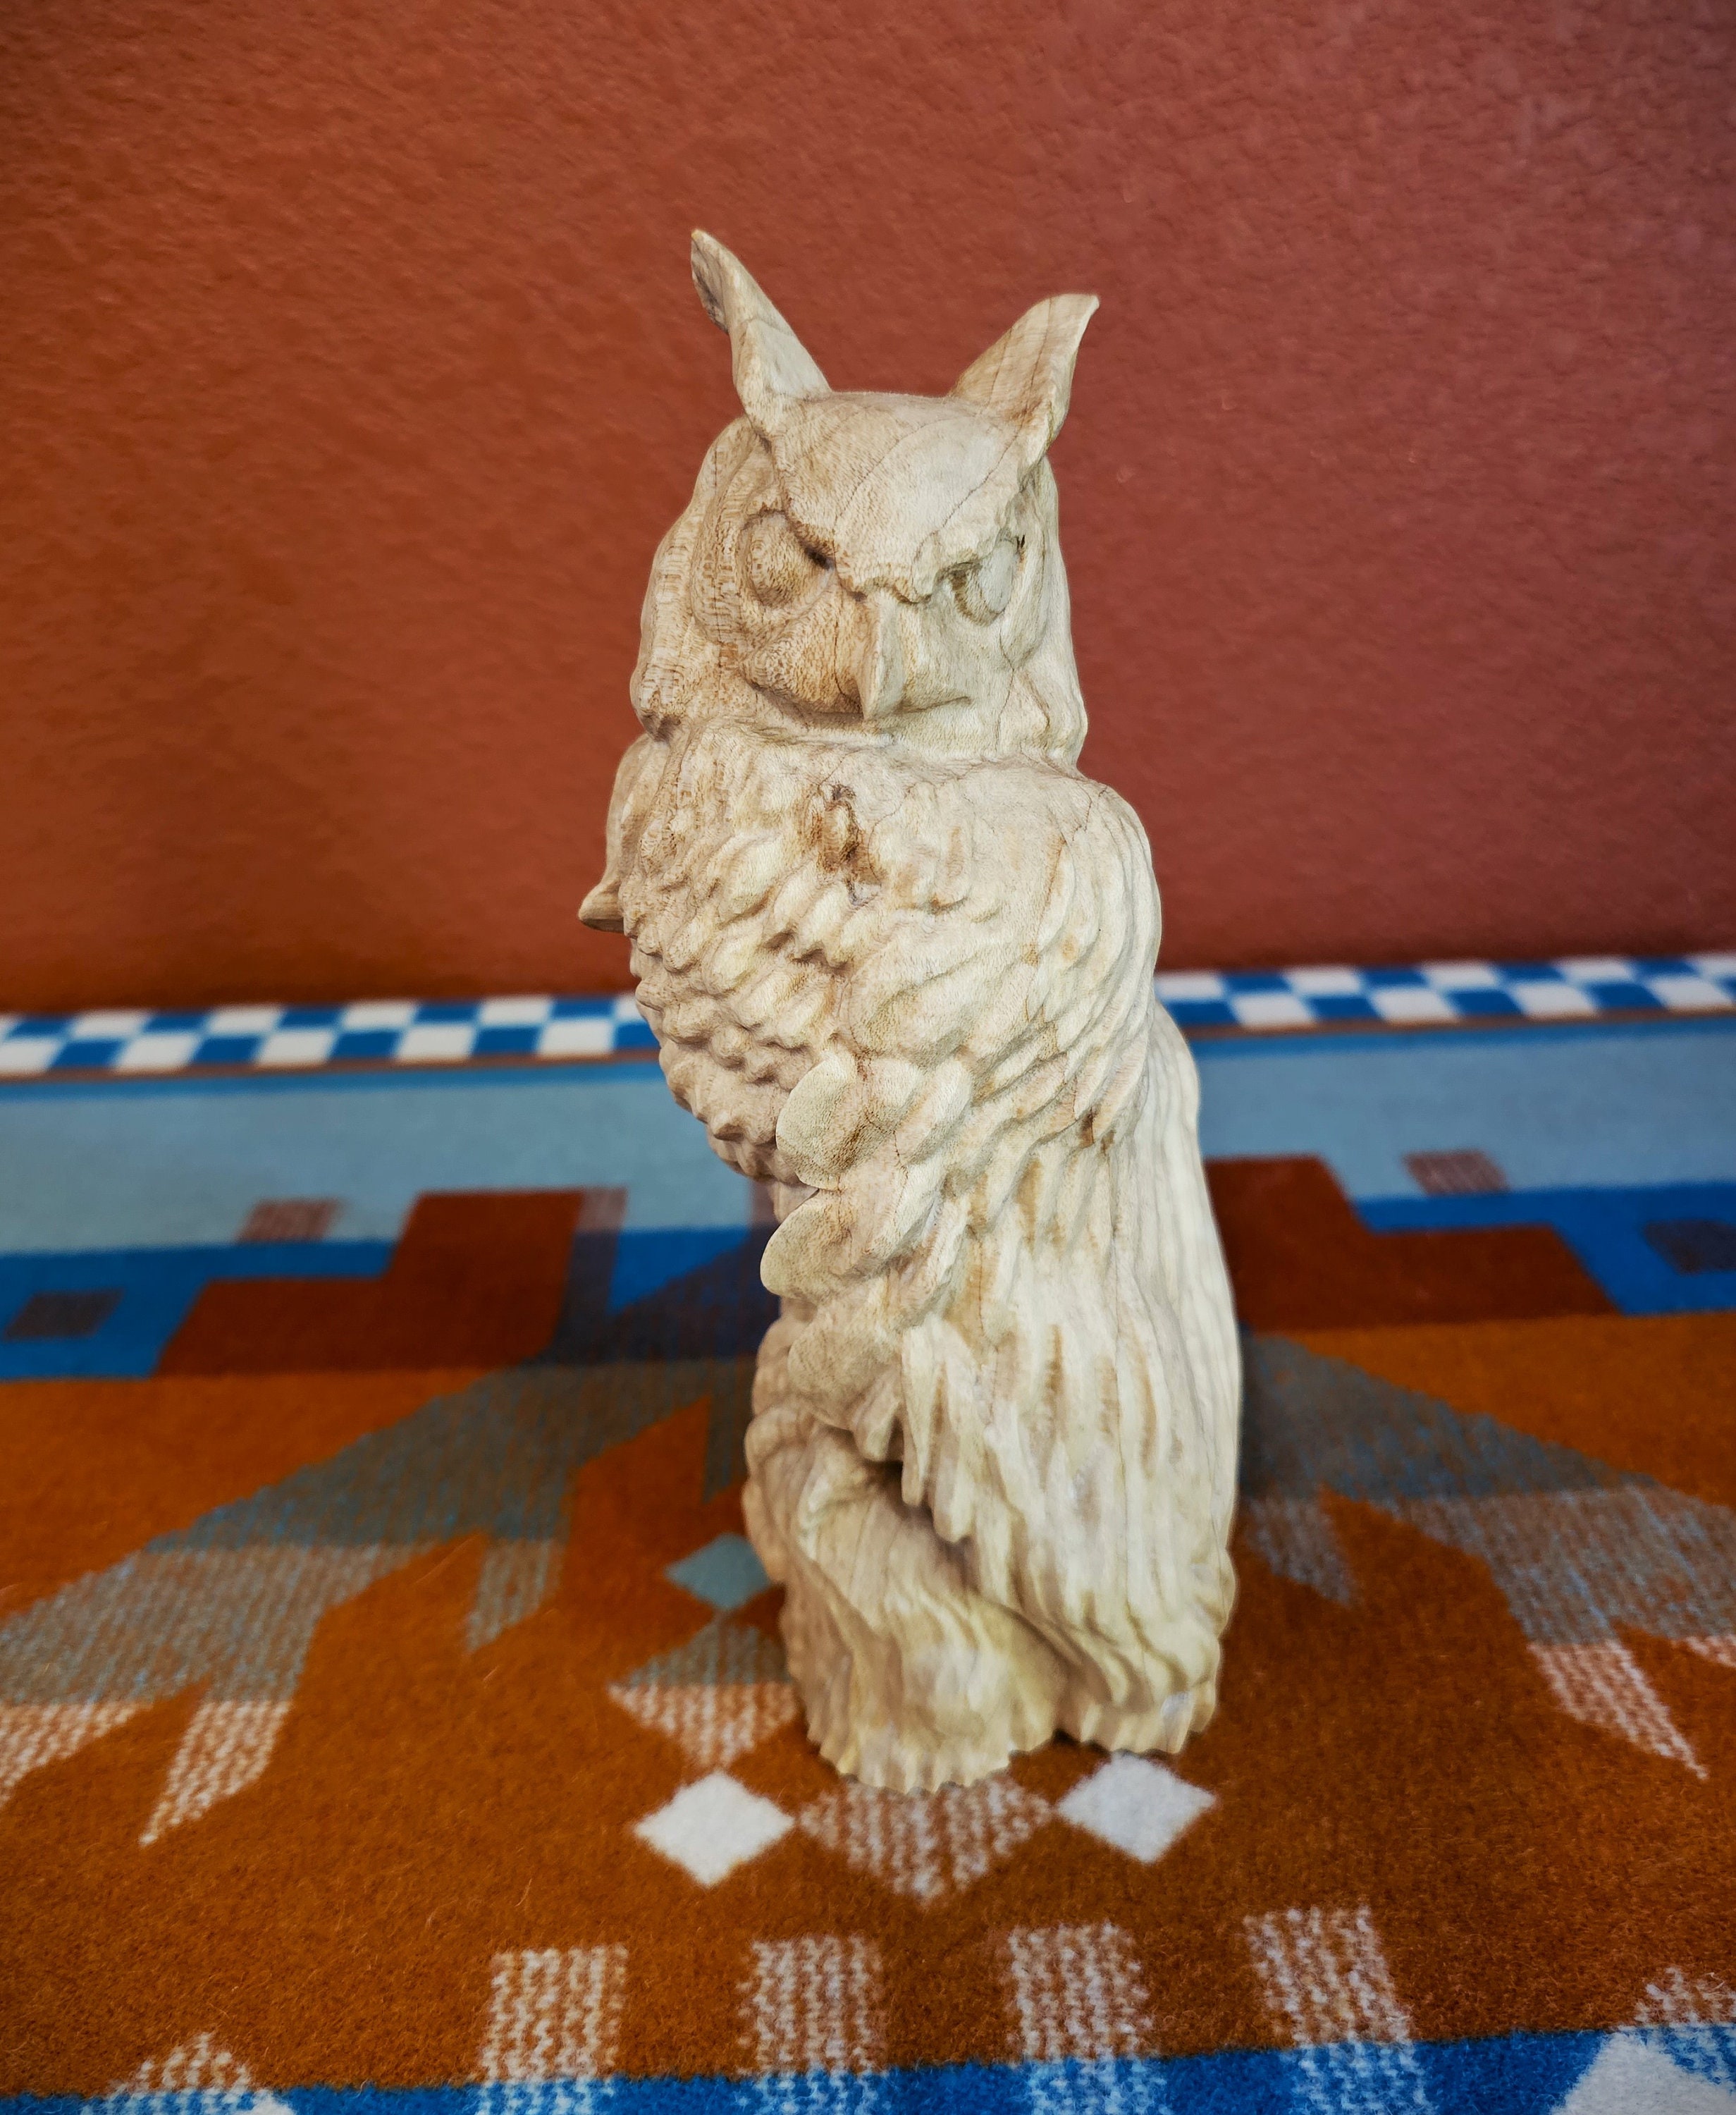 2335 - Aspen Owl Sculpture